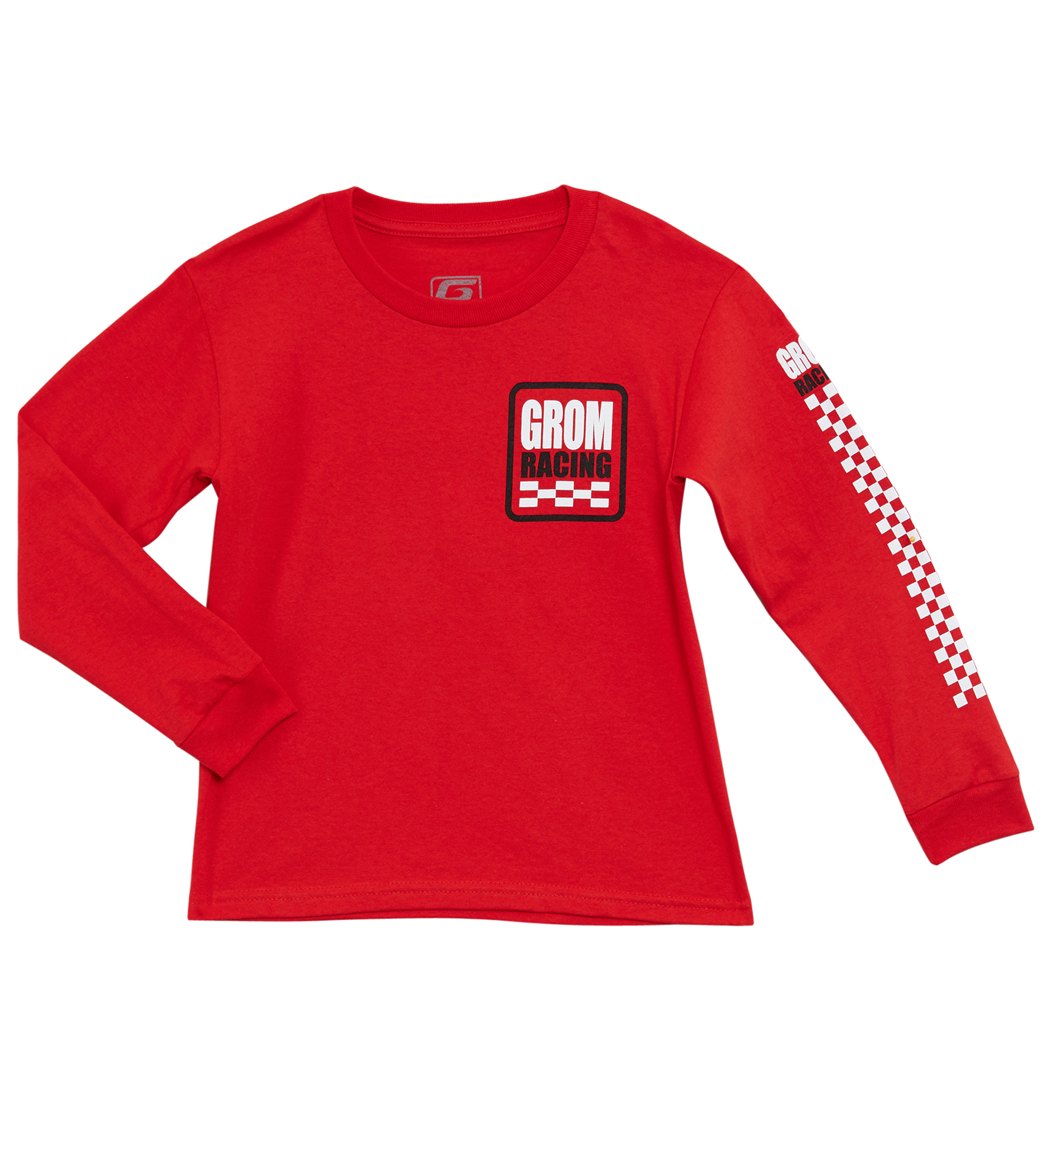 Grom Boys' Racing Tee Shirt - Red Medium 8 Cotton - Swimoutlet.com